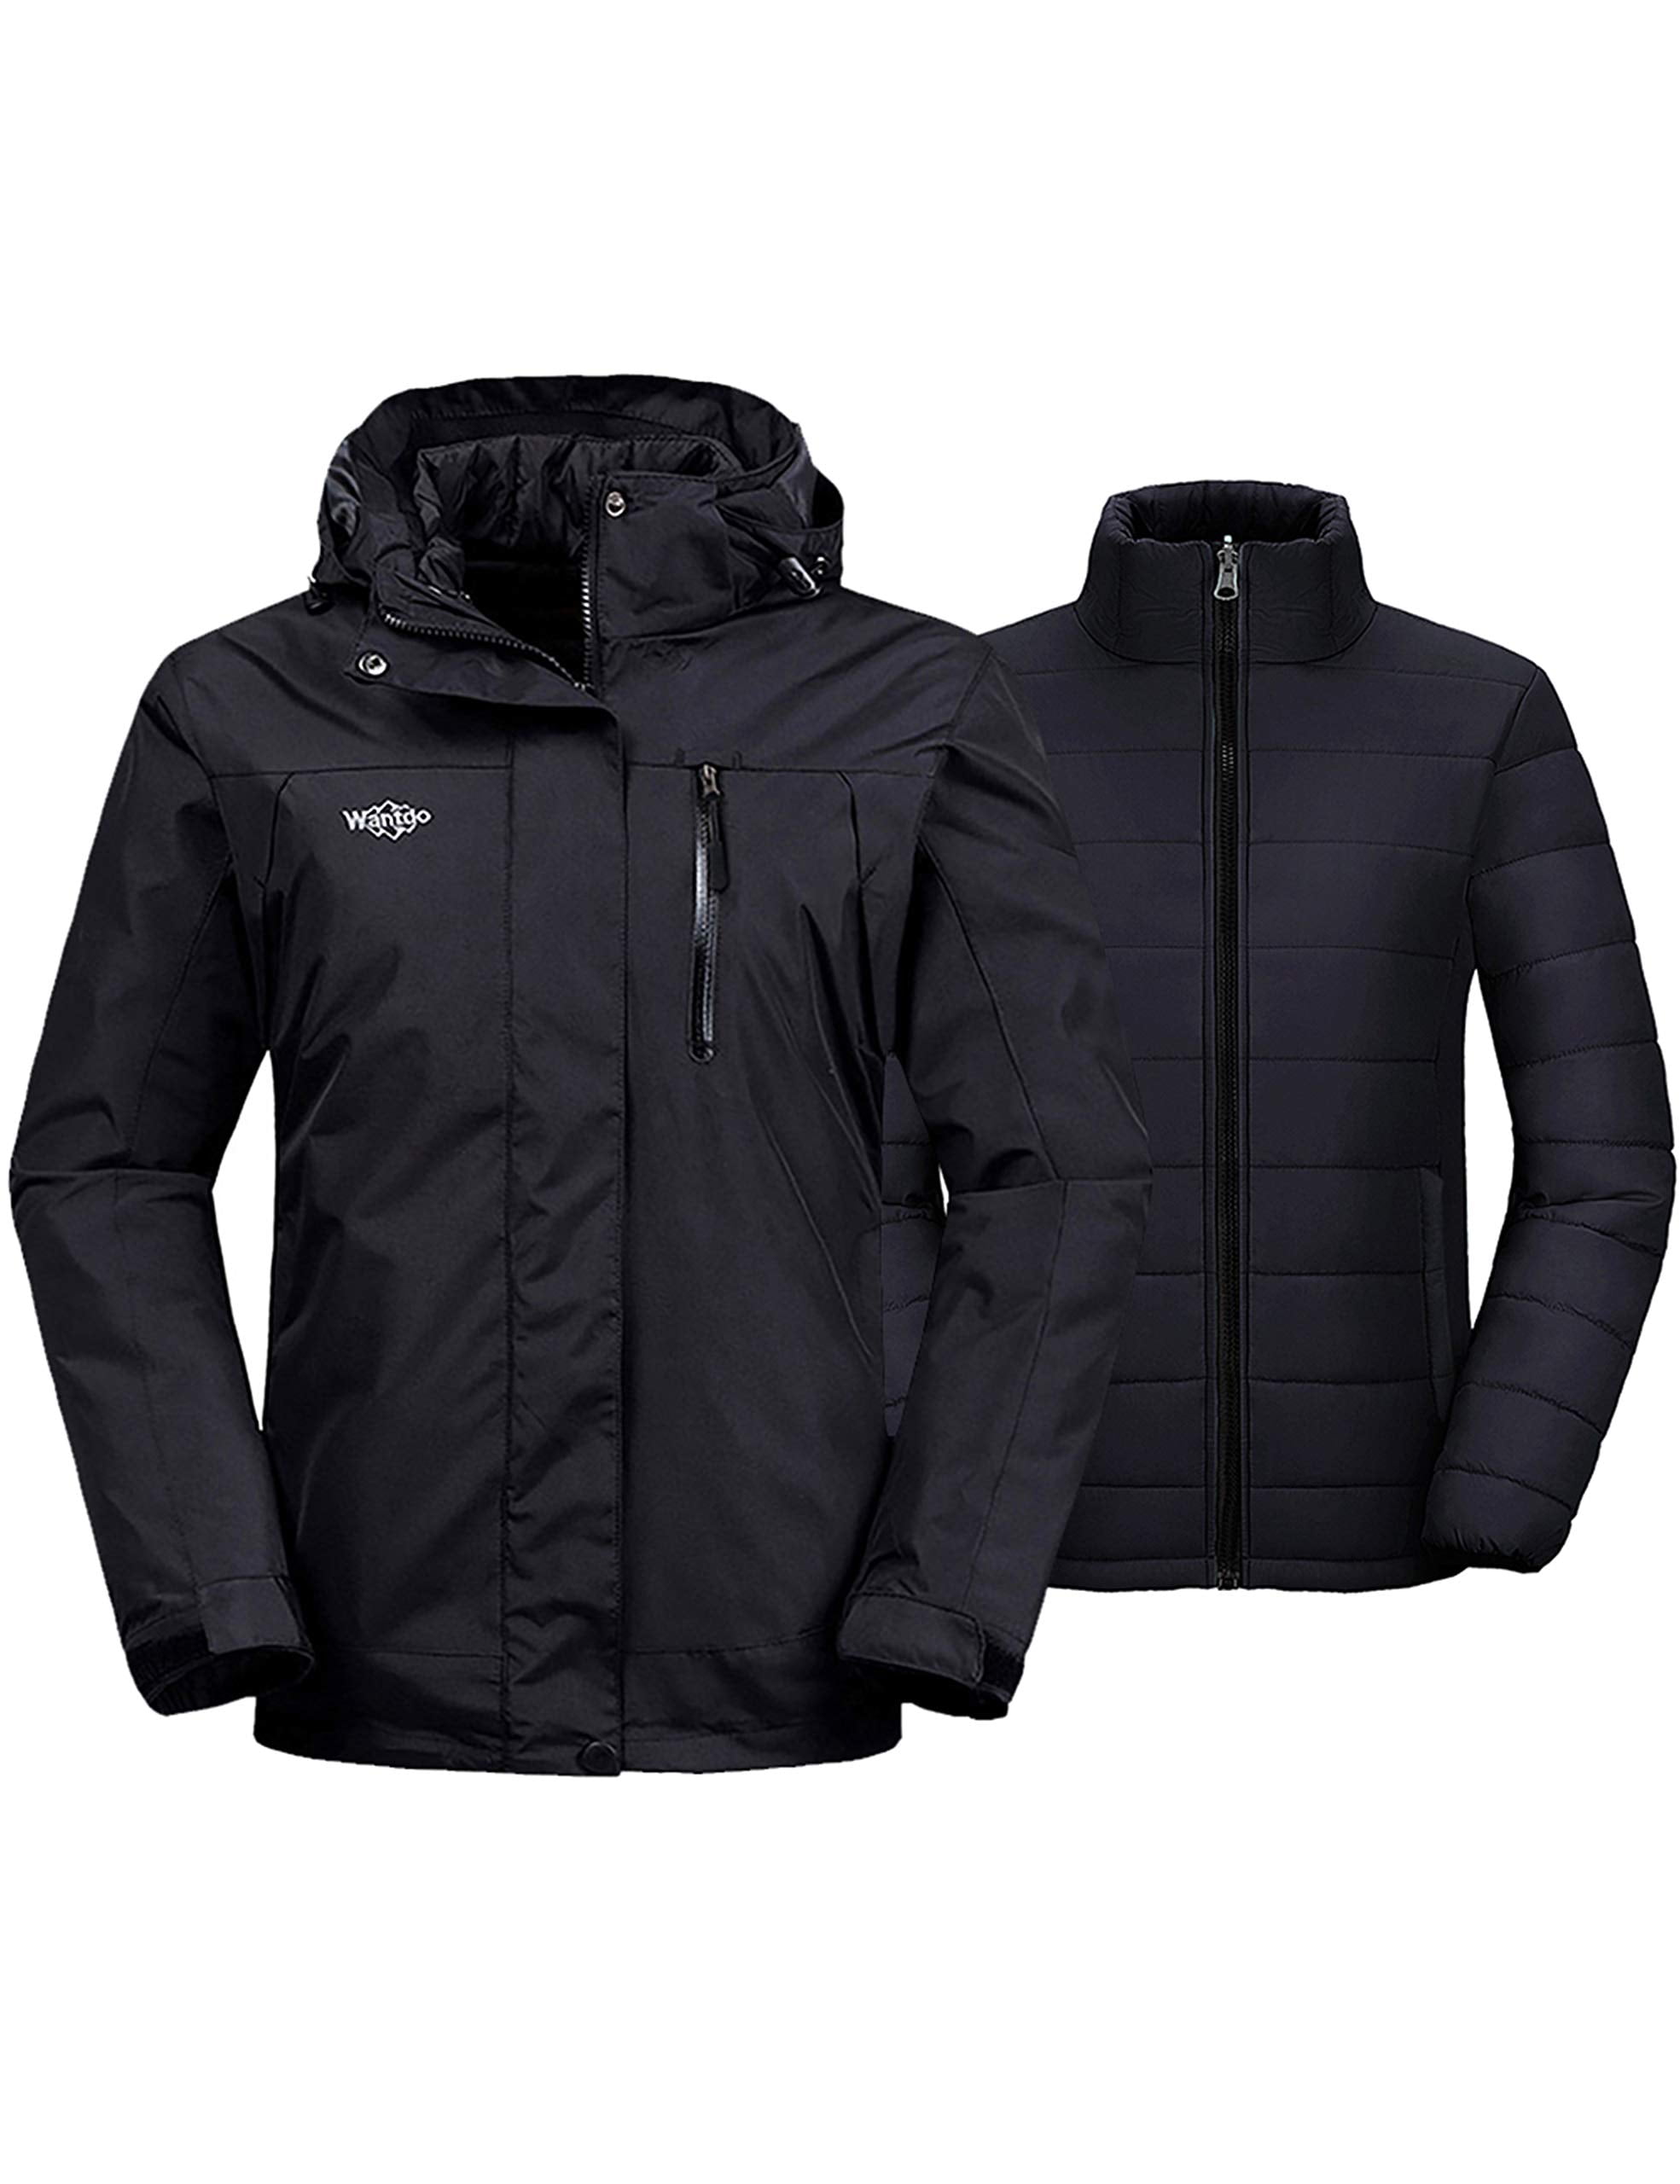 Wantdo Girl's Warm Snow Coat Waterproof Ski Jacket Windproof Winter Parka Insulated Fleece Rain Jackets 